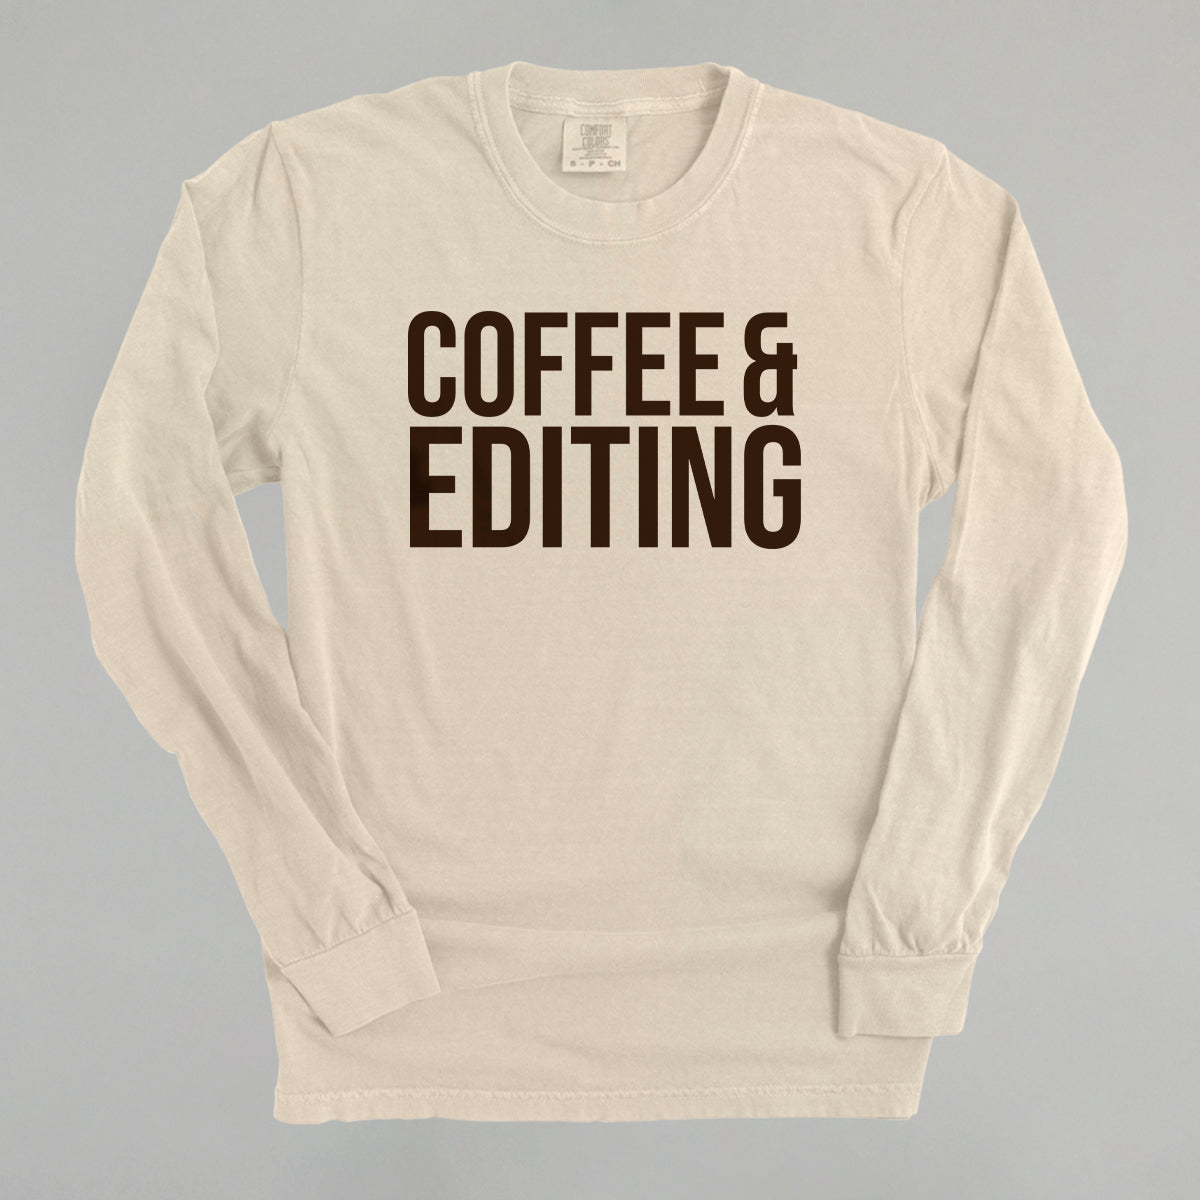 Coffee & Editing